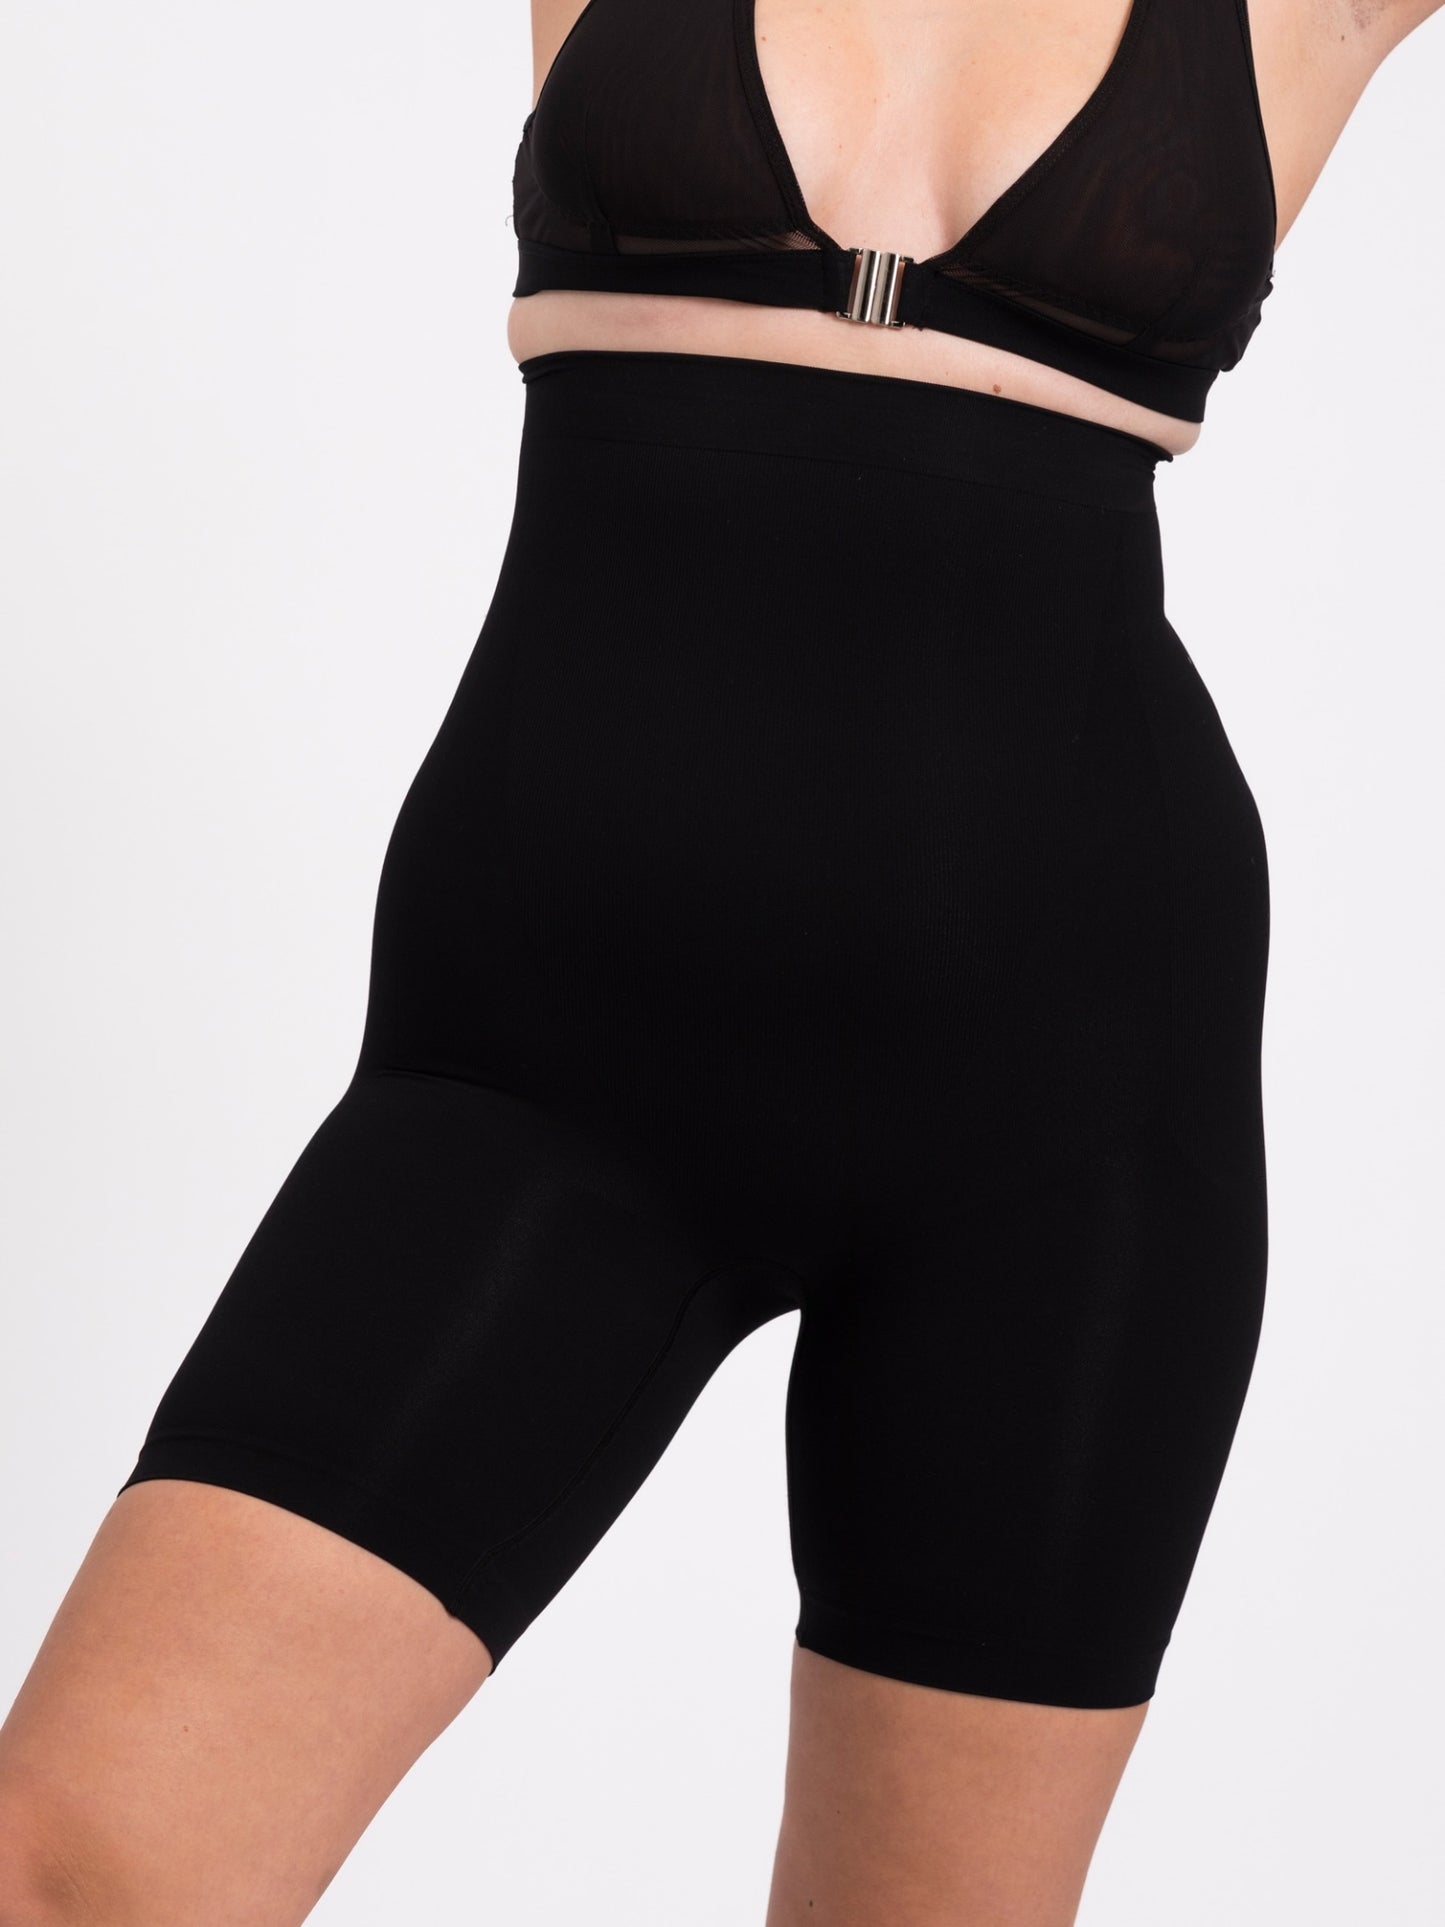 Alturra Highwaist Shaping shorts - Black